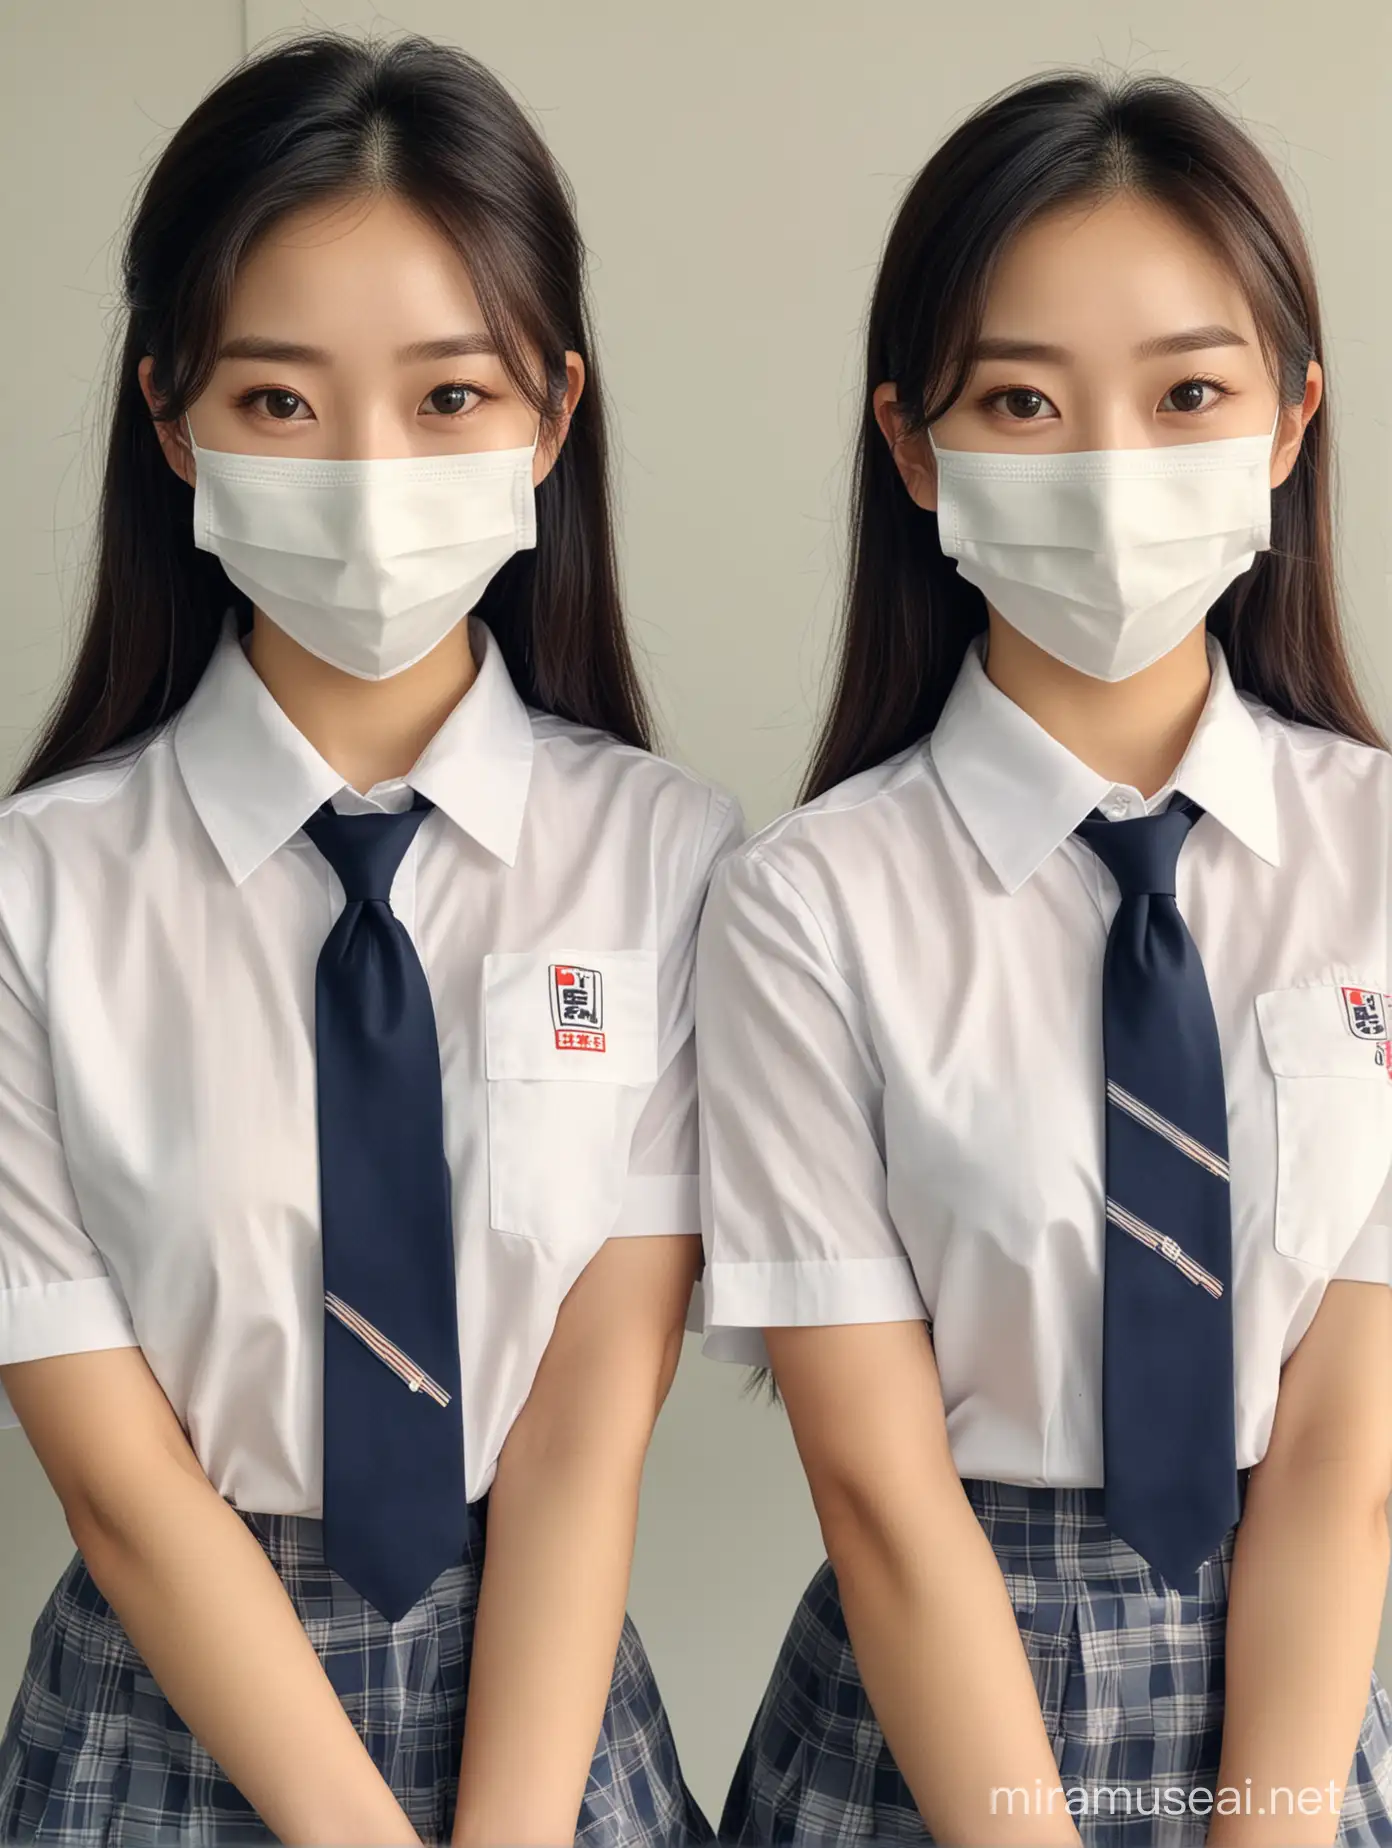 Pretty Korean School Sisters Smiling in Uniform Masks